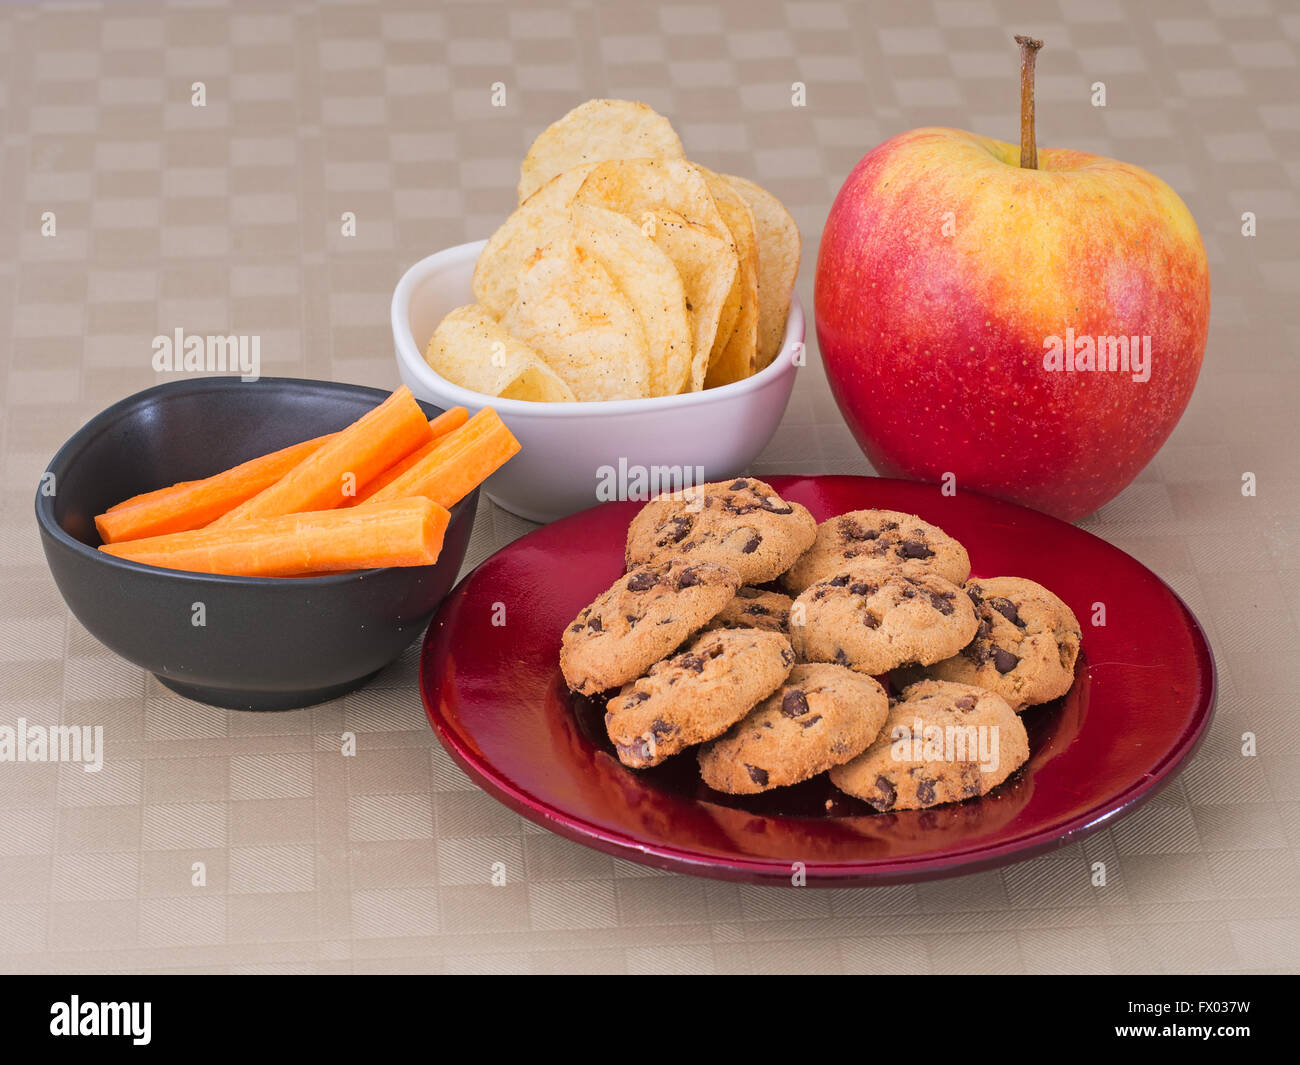 Healthy versus unhealthy food options concept. Stock Photo